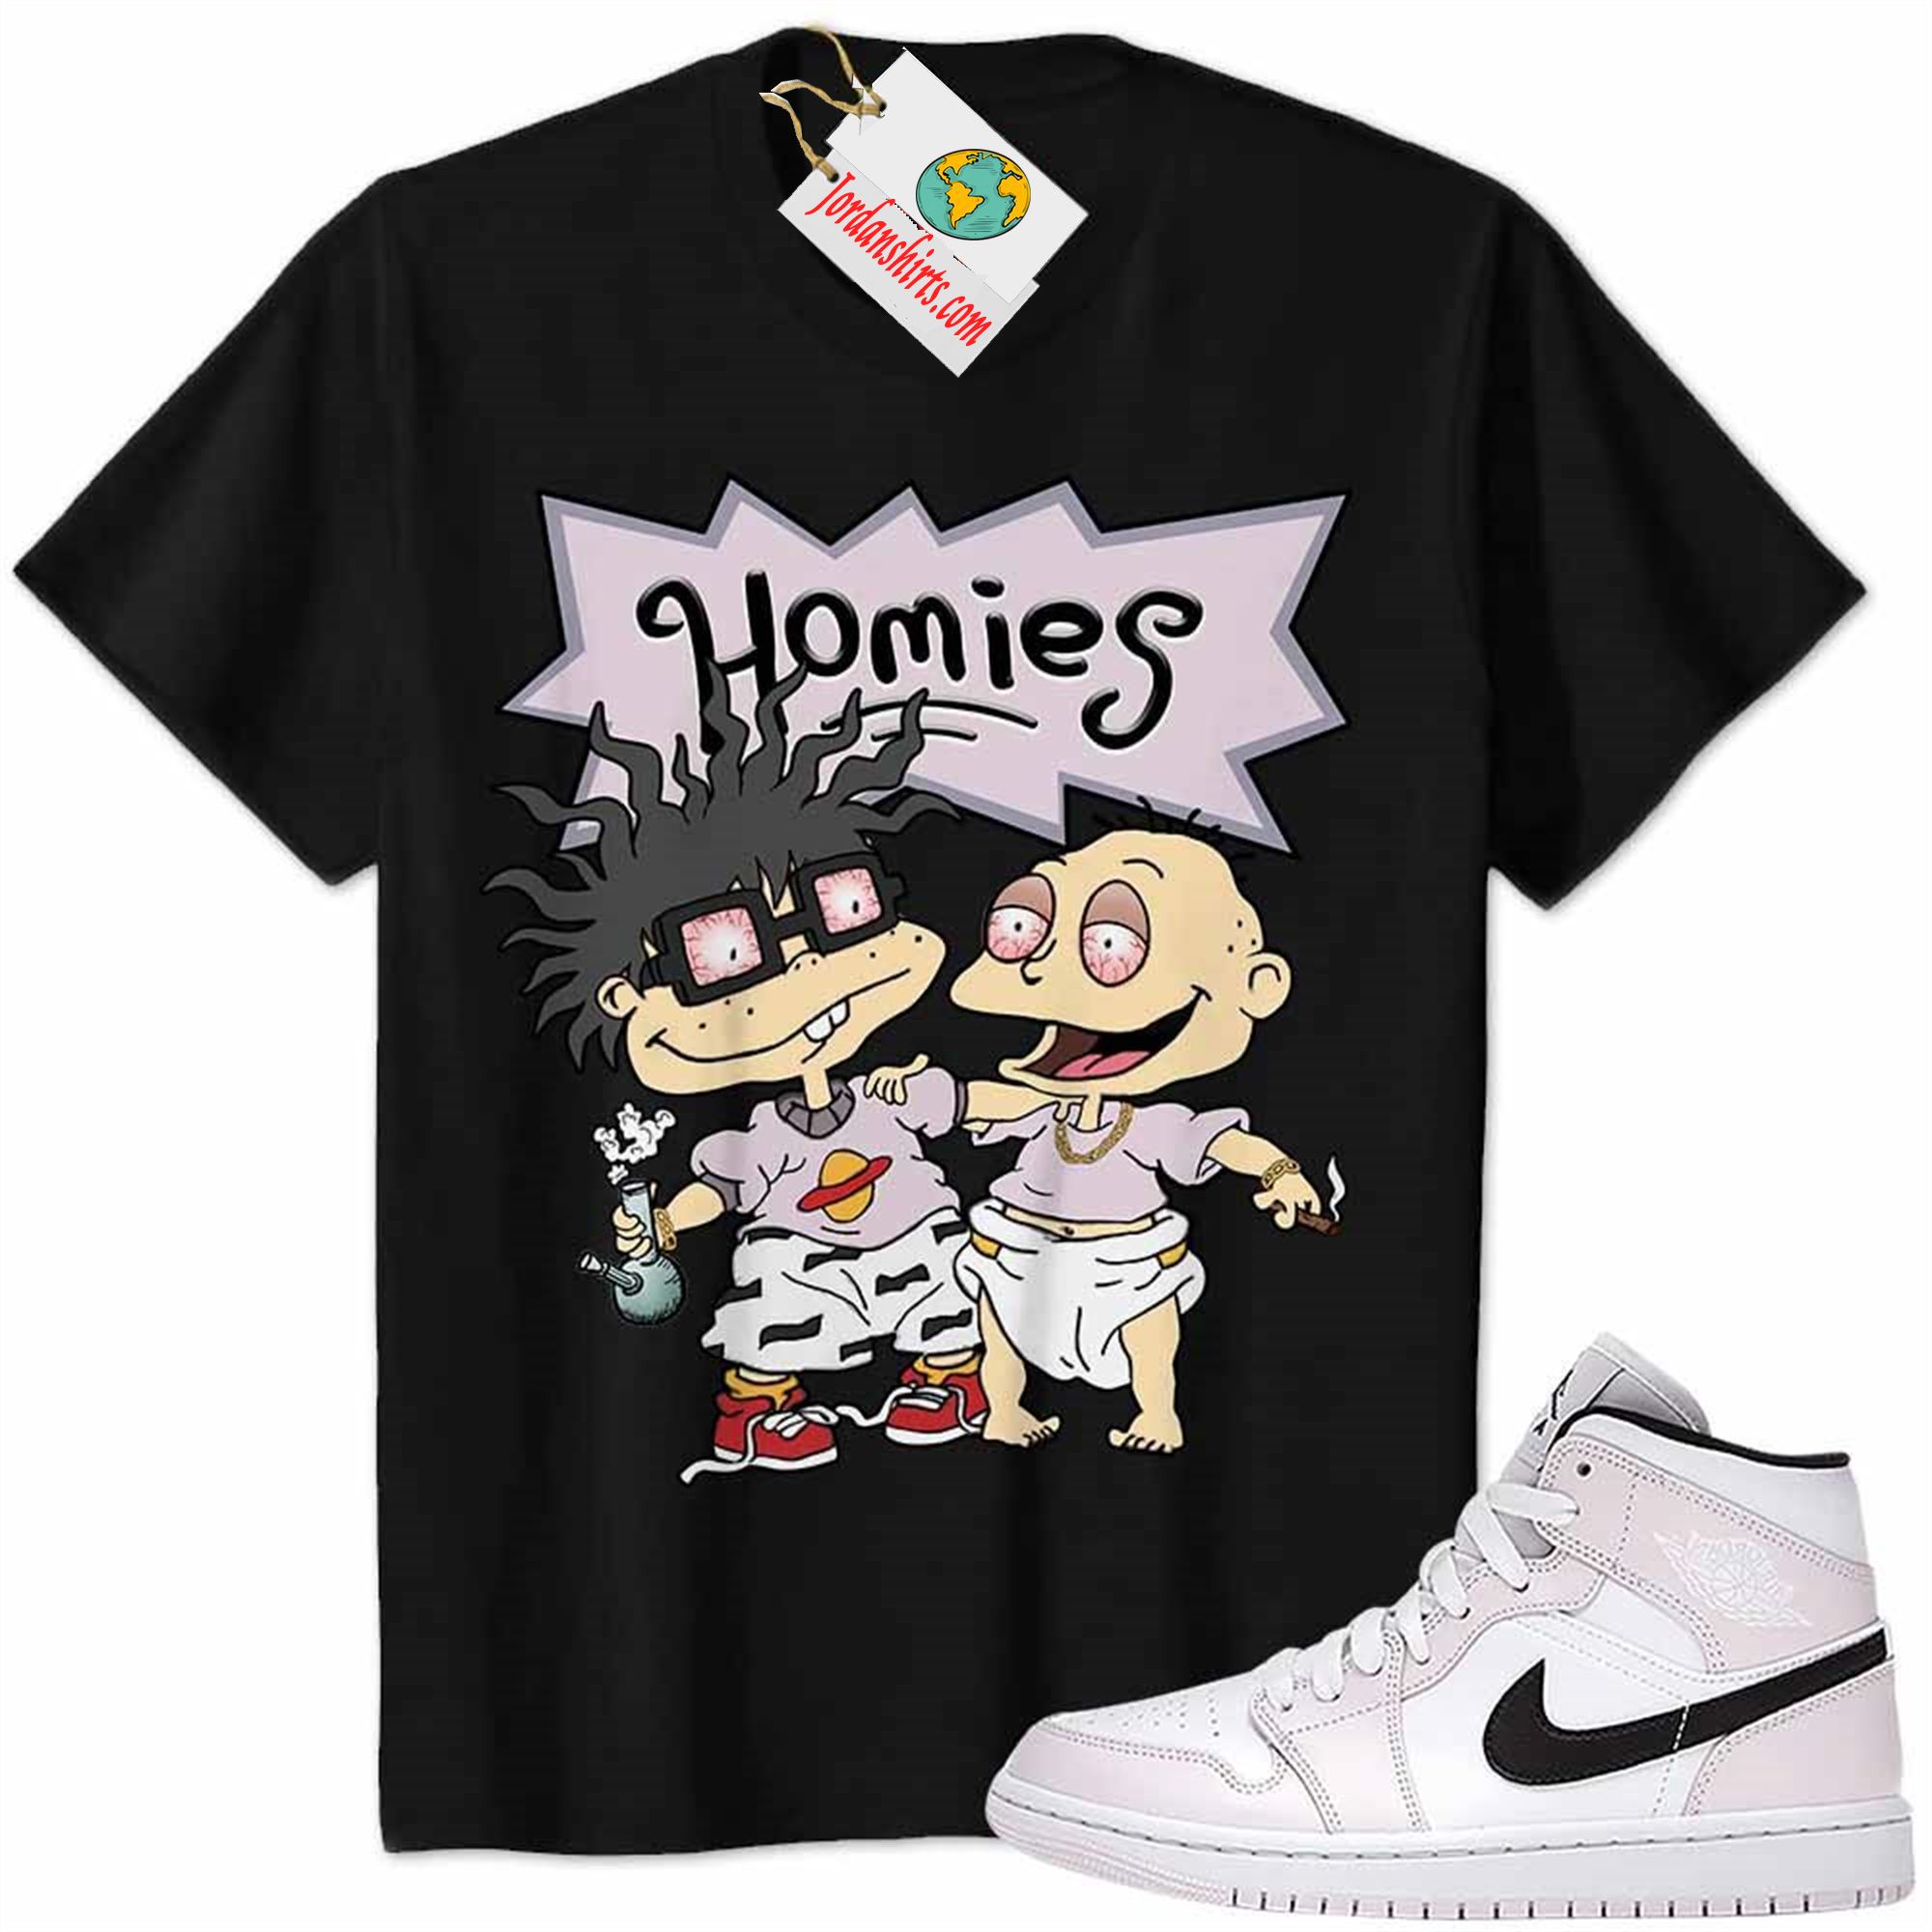 Jordan 1 Shirt, Jordan 1 Barely Rose Shirt Hommies Tommy Pickles Chuckie Finster Rugrats Black Plus Size Up To 5xl